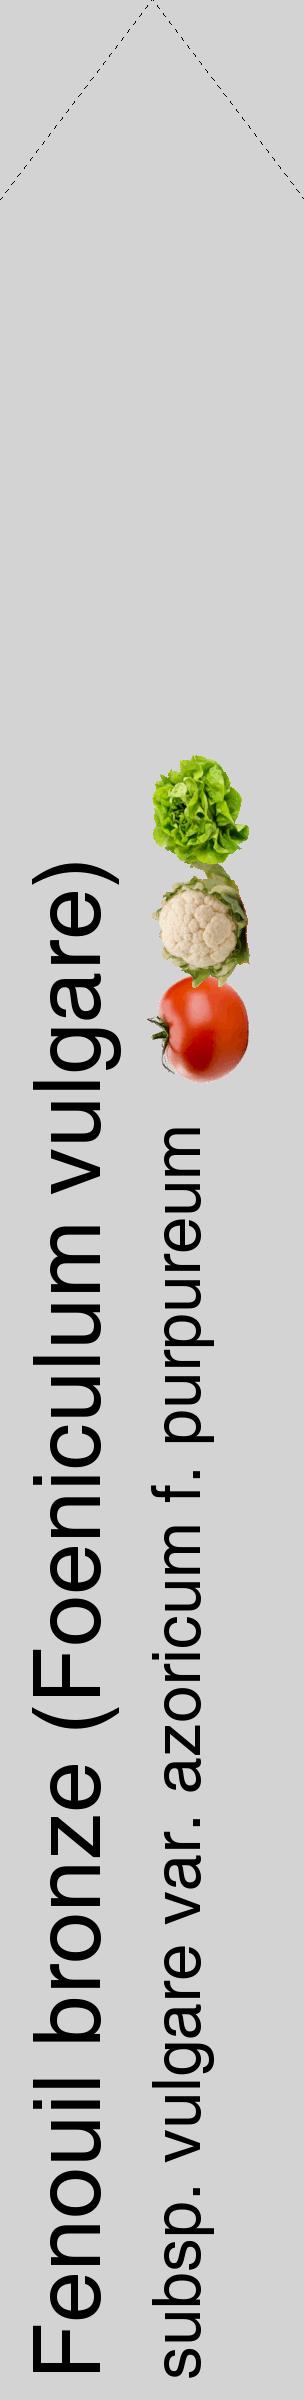 Étiquette de : Foeniculum vulgare subsp. vulgare var. azoricum f. purpureum - format c - style noire56_simplehel avec comestibilité simplifiée